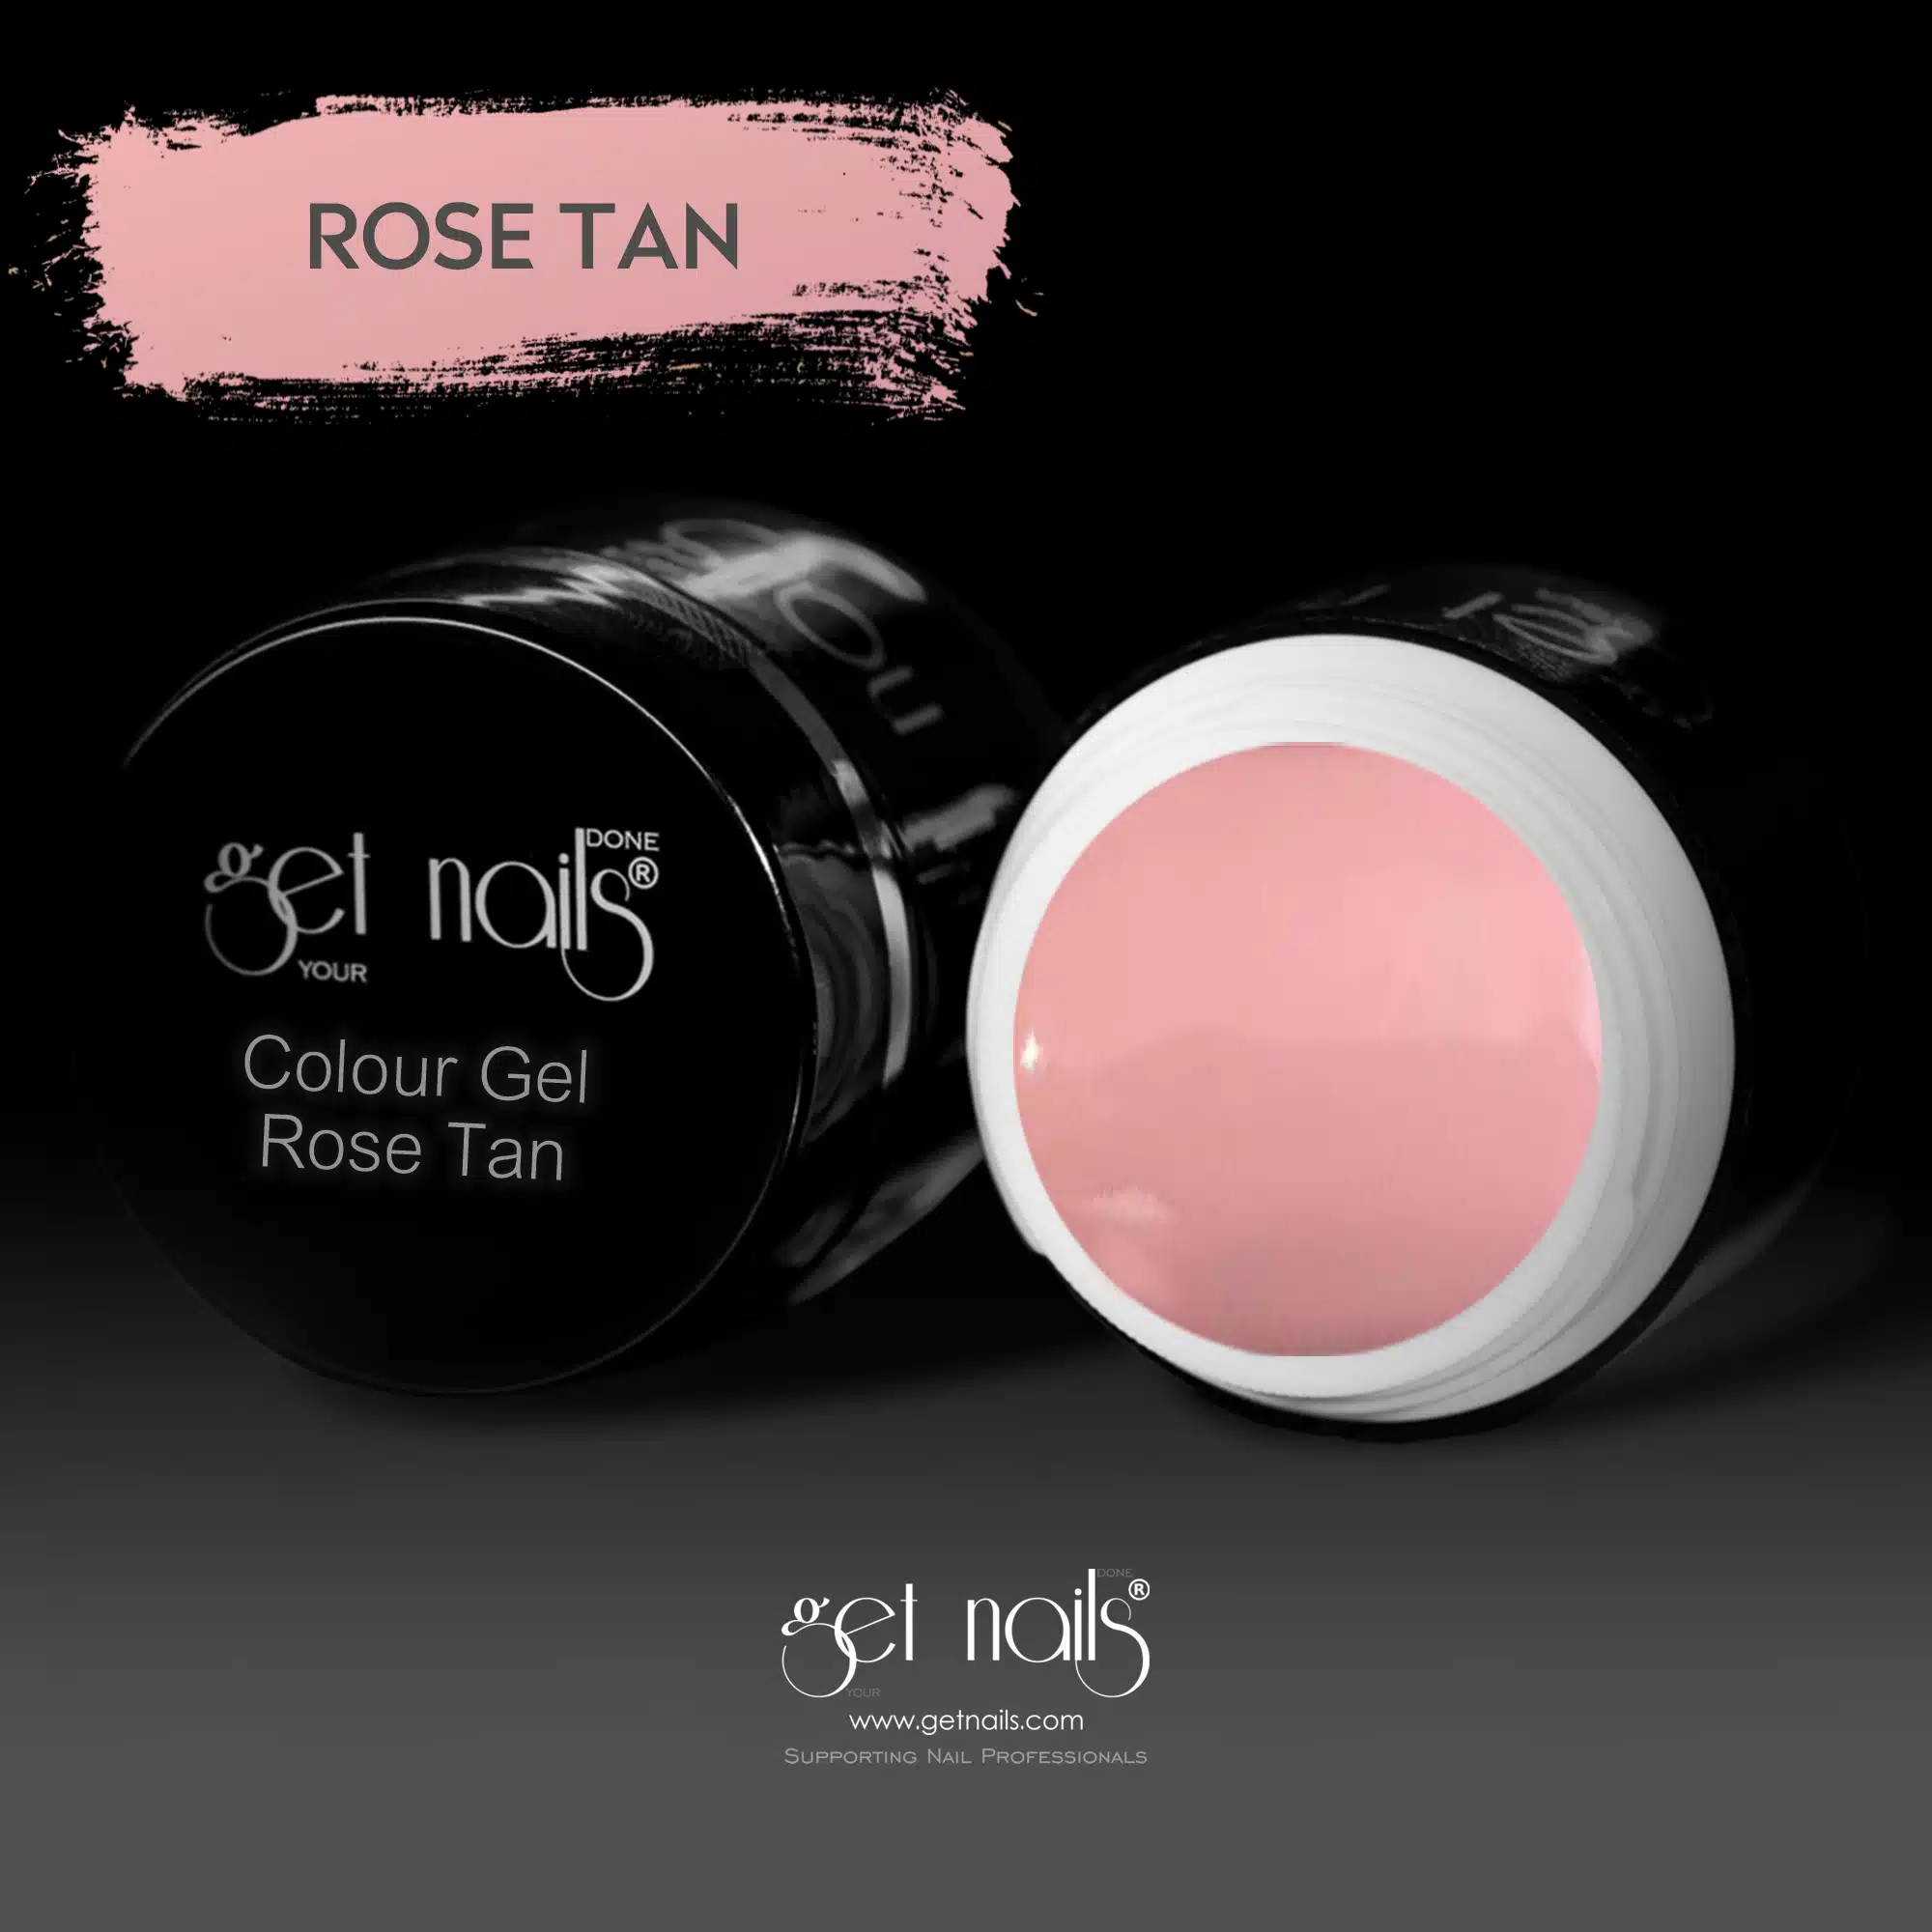 Get Nails Austria - Colour Gel Rose Tan 5g